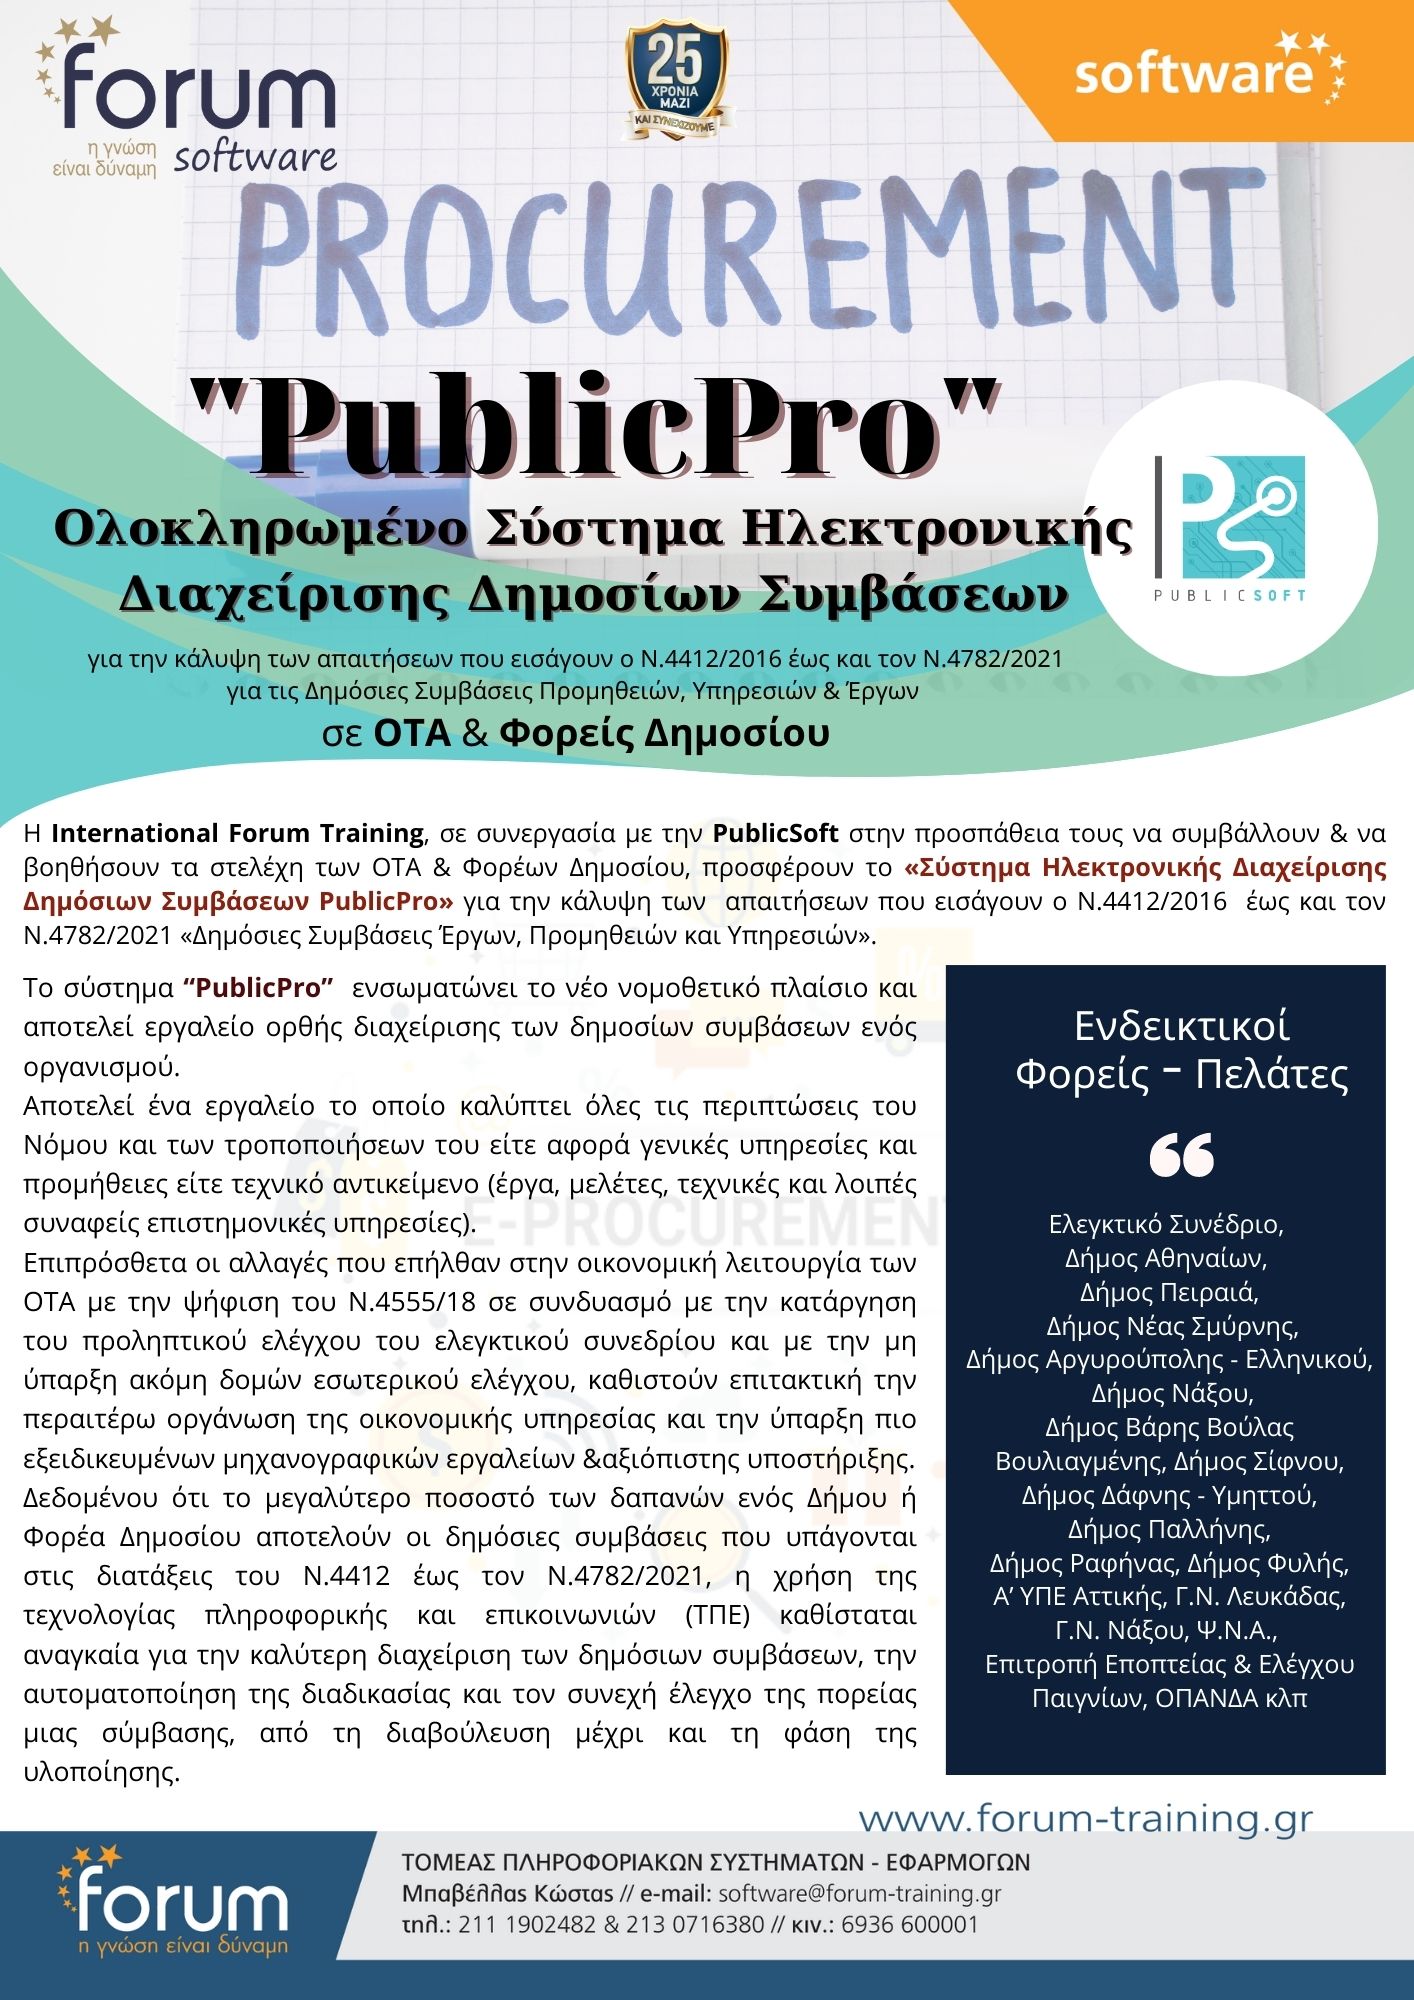 PublicPro procurement